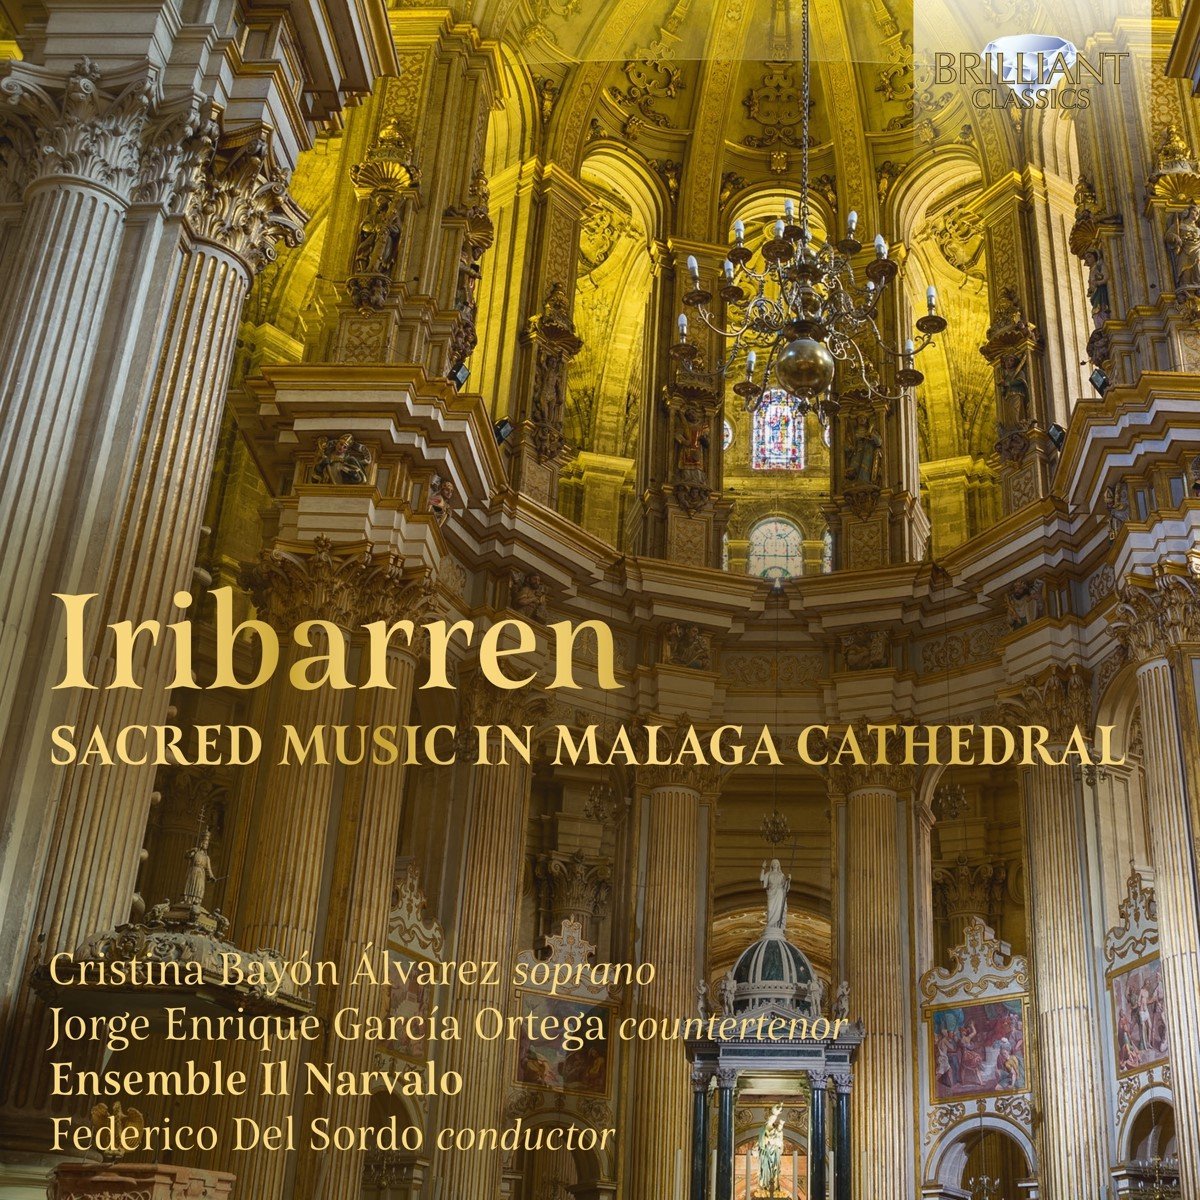 Ensemble Il Narvalo & Federico Del Sordo - Iribarren: Sacred Music In Malaga Cathedral (CD) - Ensemble Il Narvalo & Federico Del Sordo